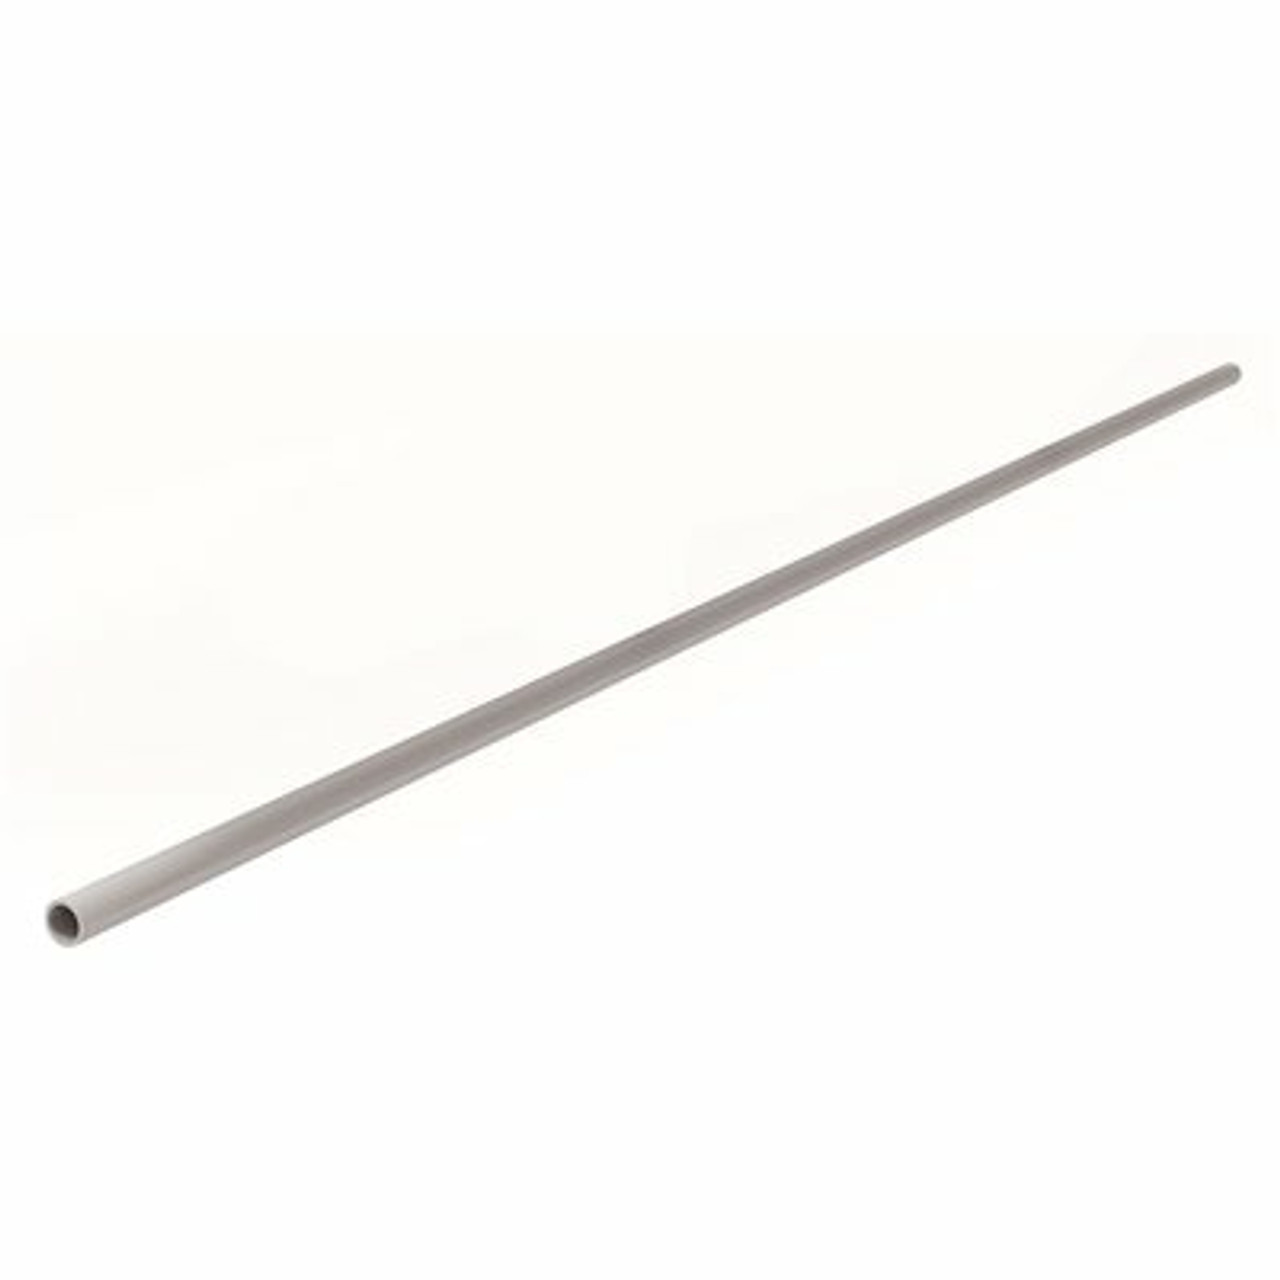 Closetmaid 120 In. Chrome Metal Heavy-Duty Shelf Bracket Rods For Wire Shelving